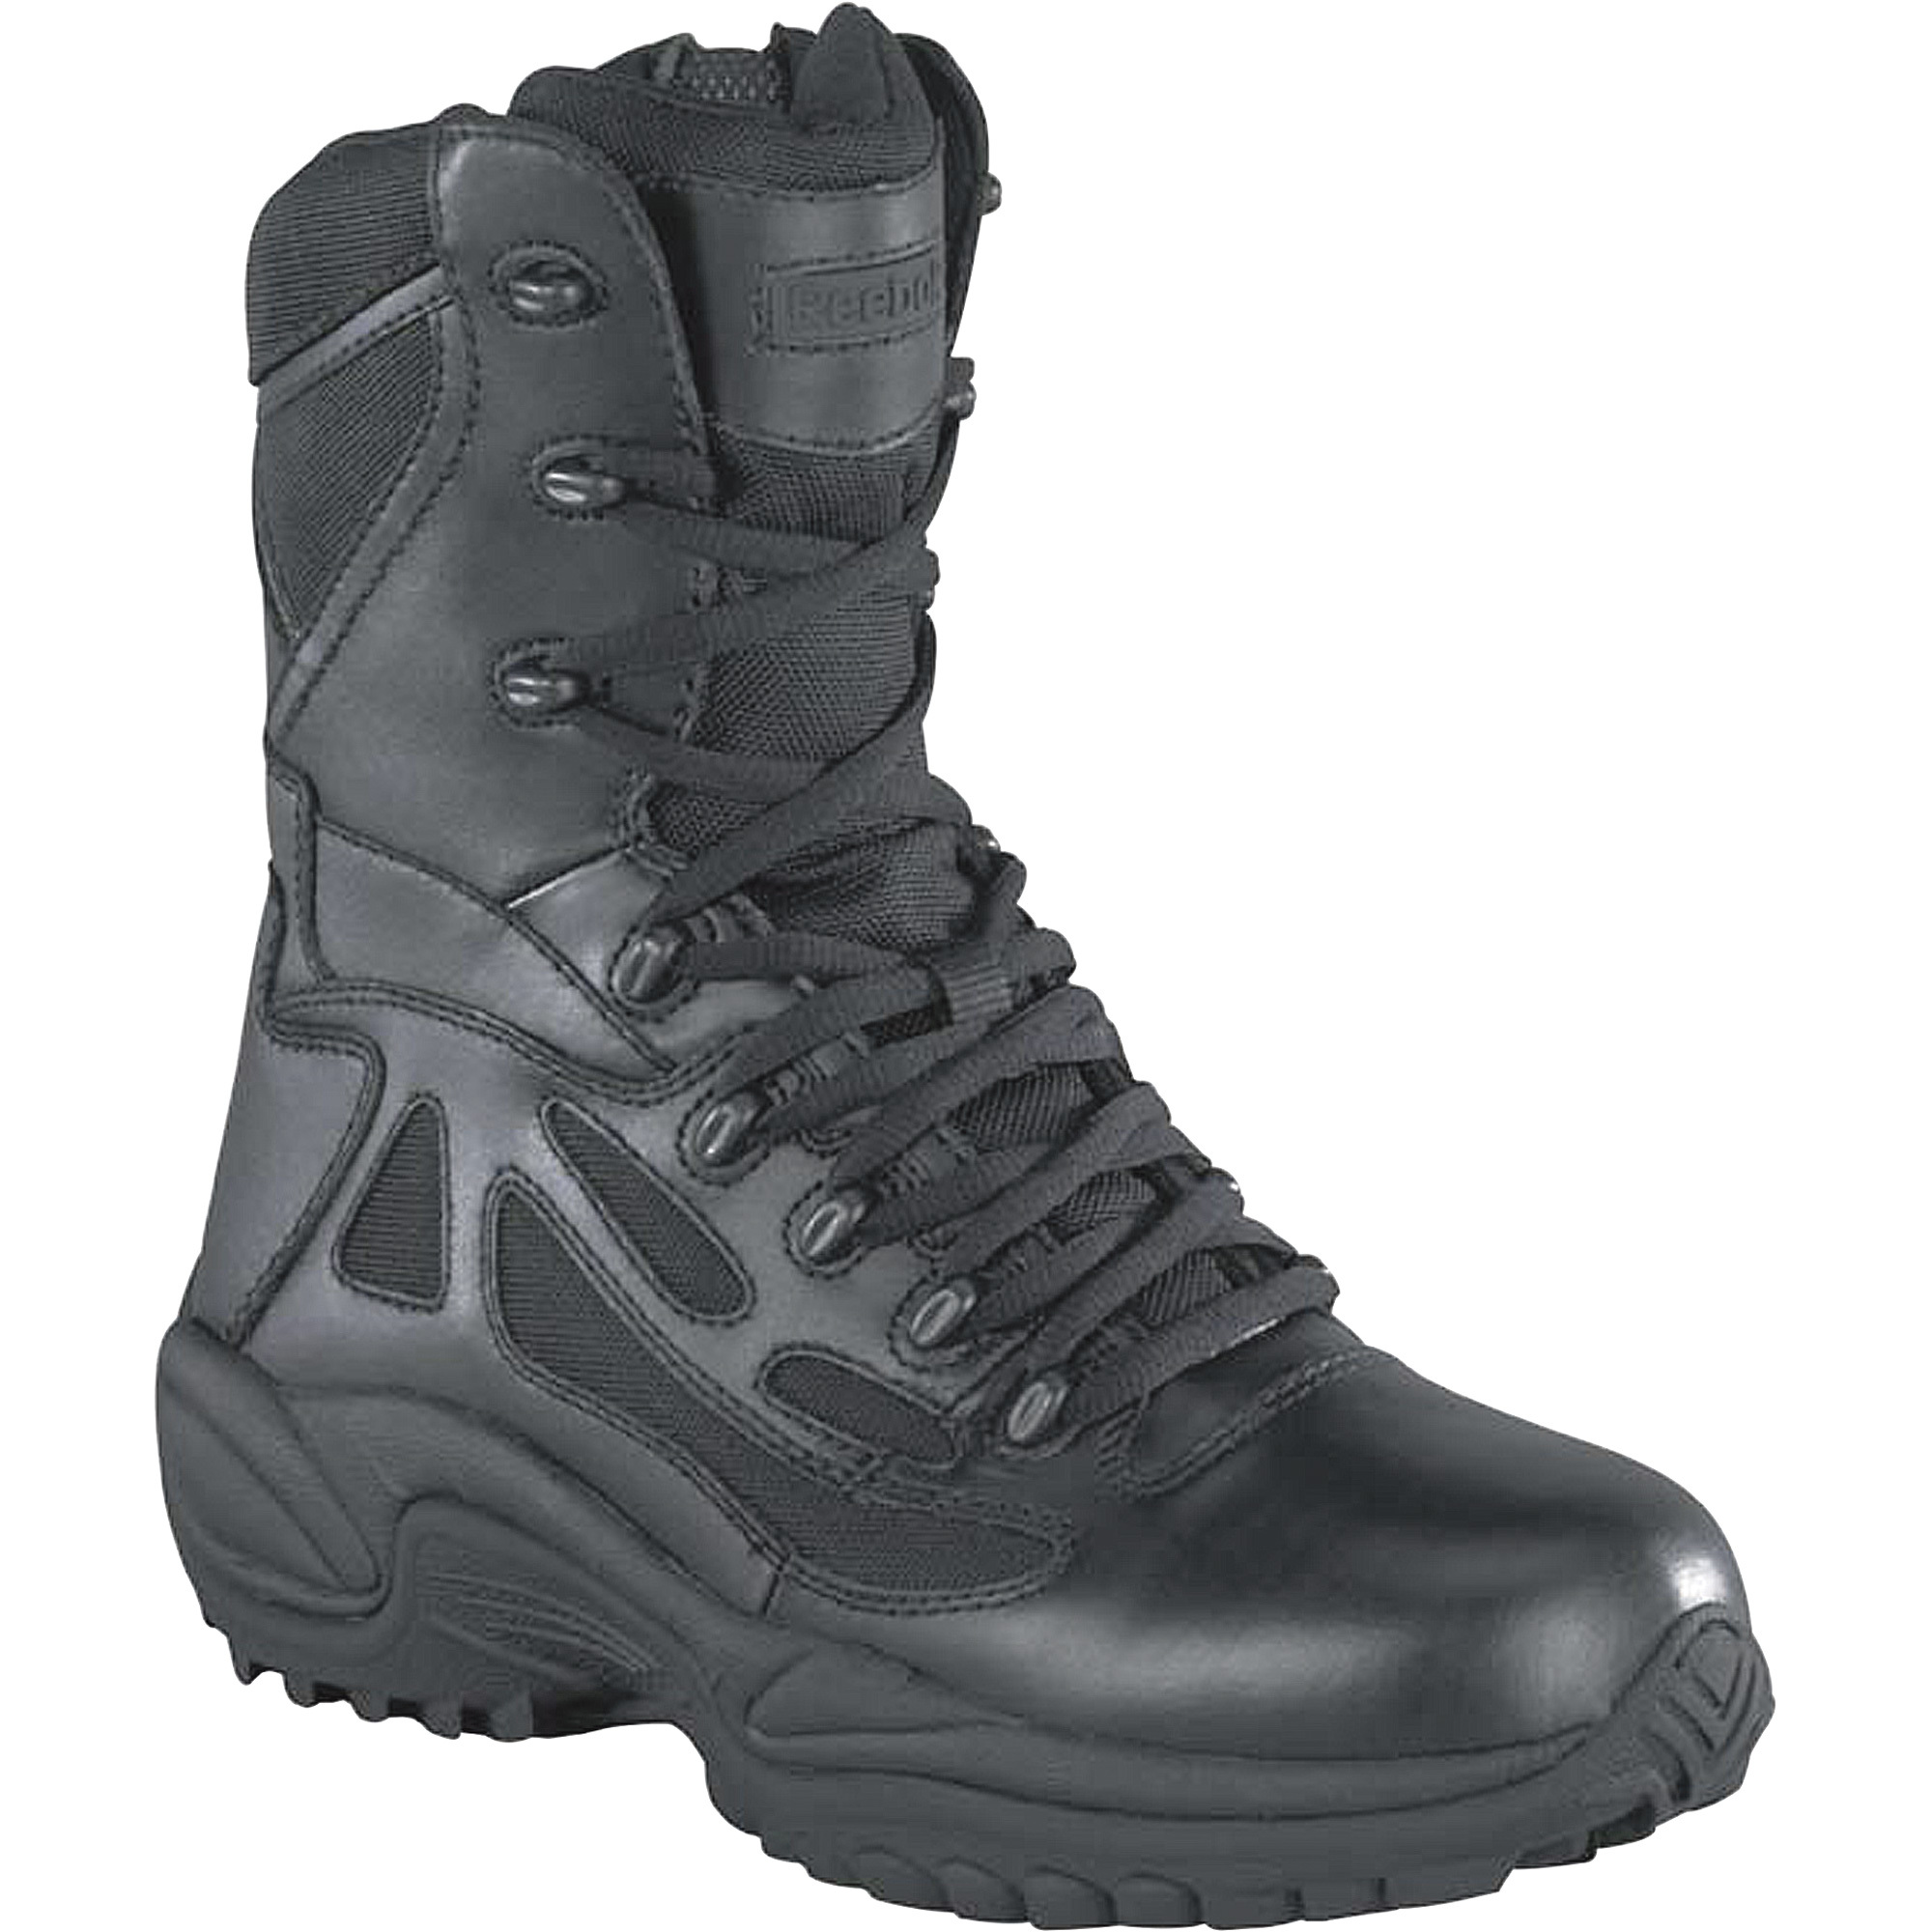 Reebok Men's 8Inch Rapid Response Waterproof Side-Zip Boot - Black, Size 14, Model RB8877 -  RB8877-M-14.0